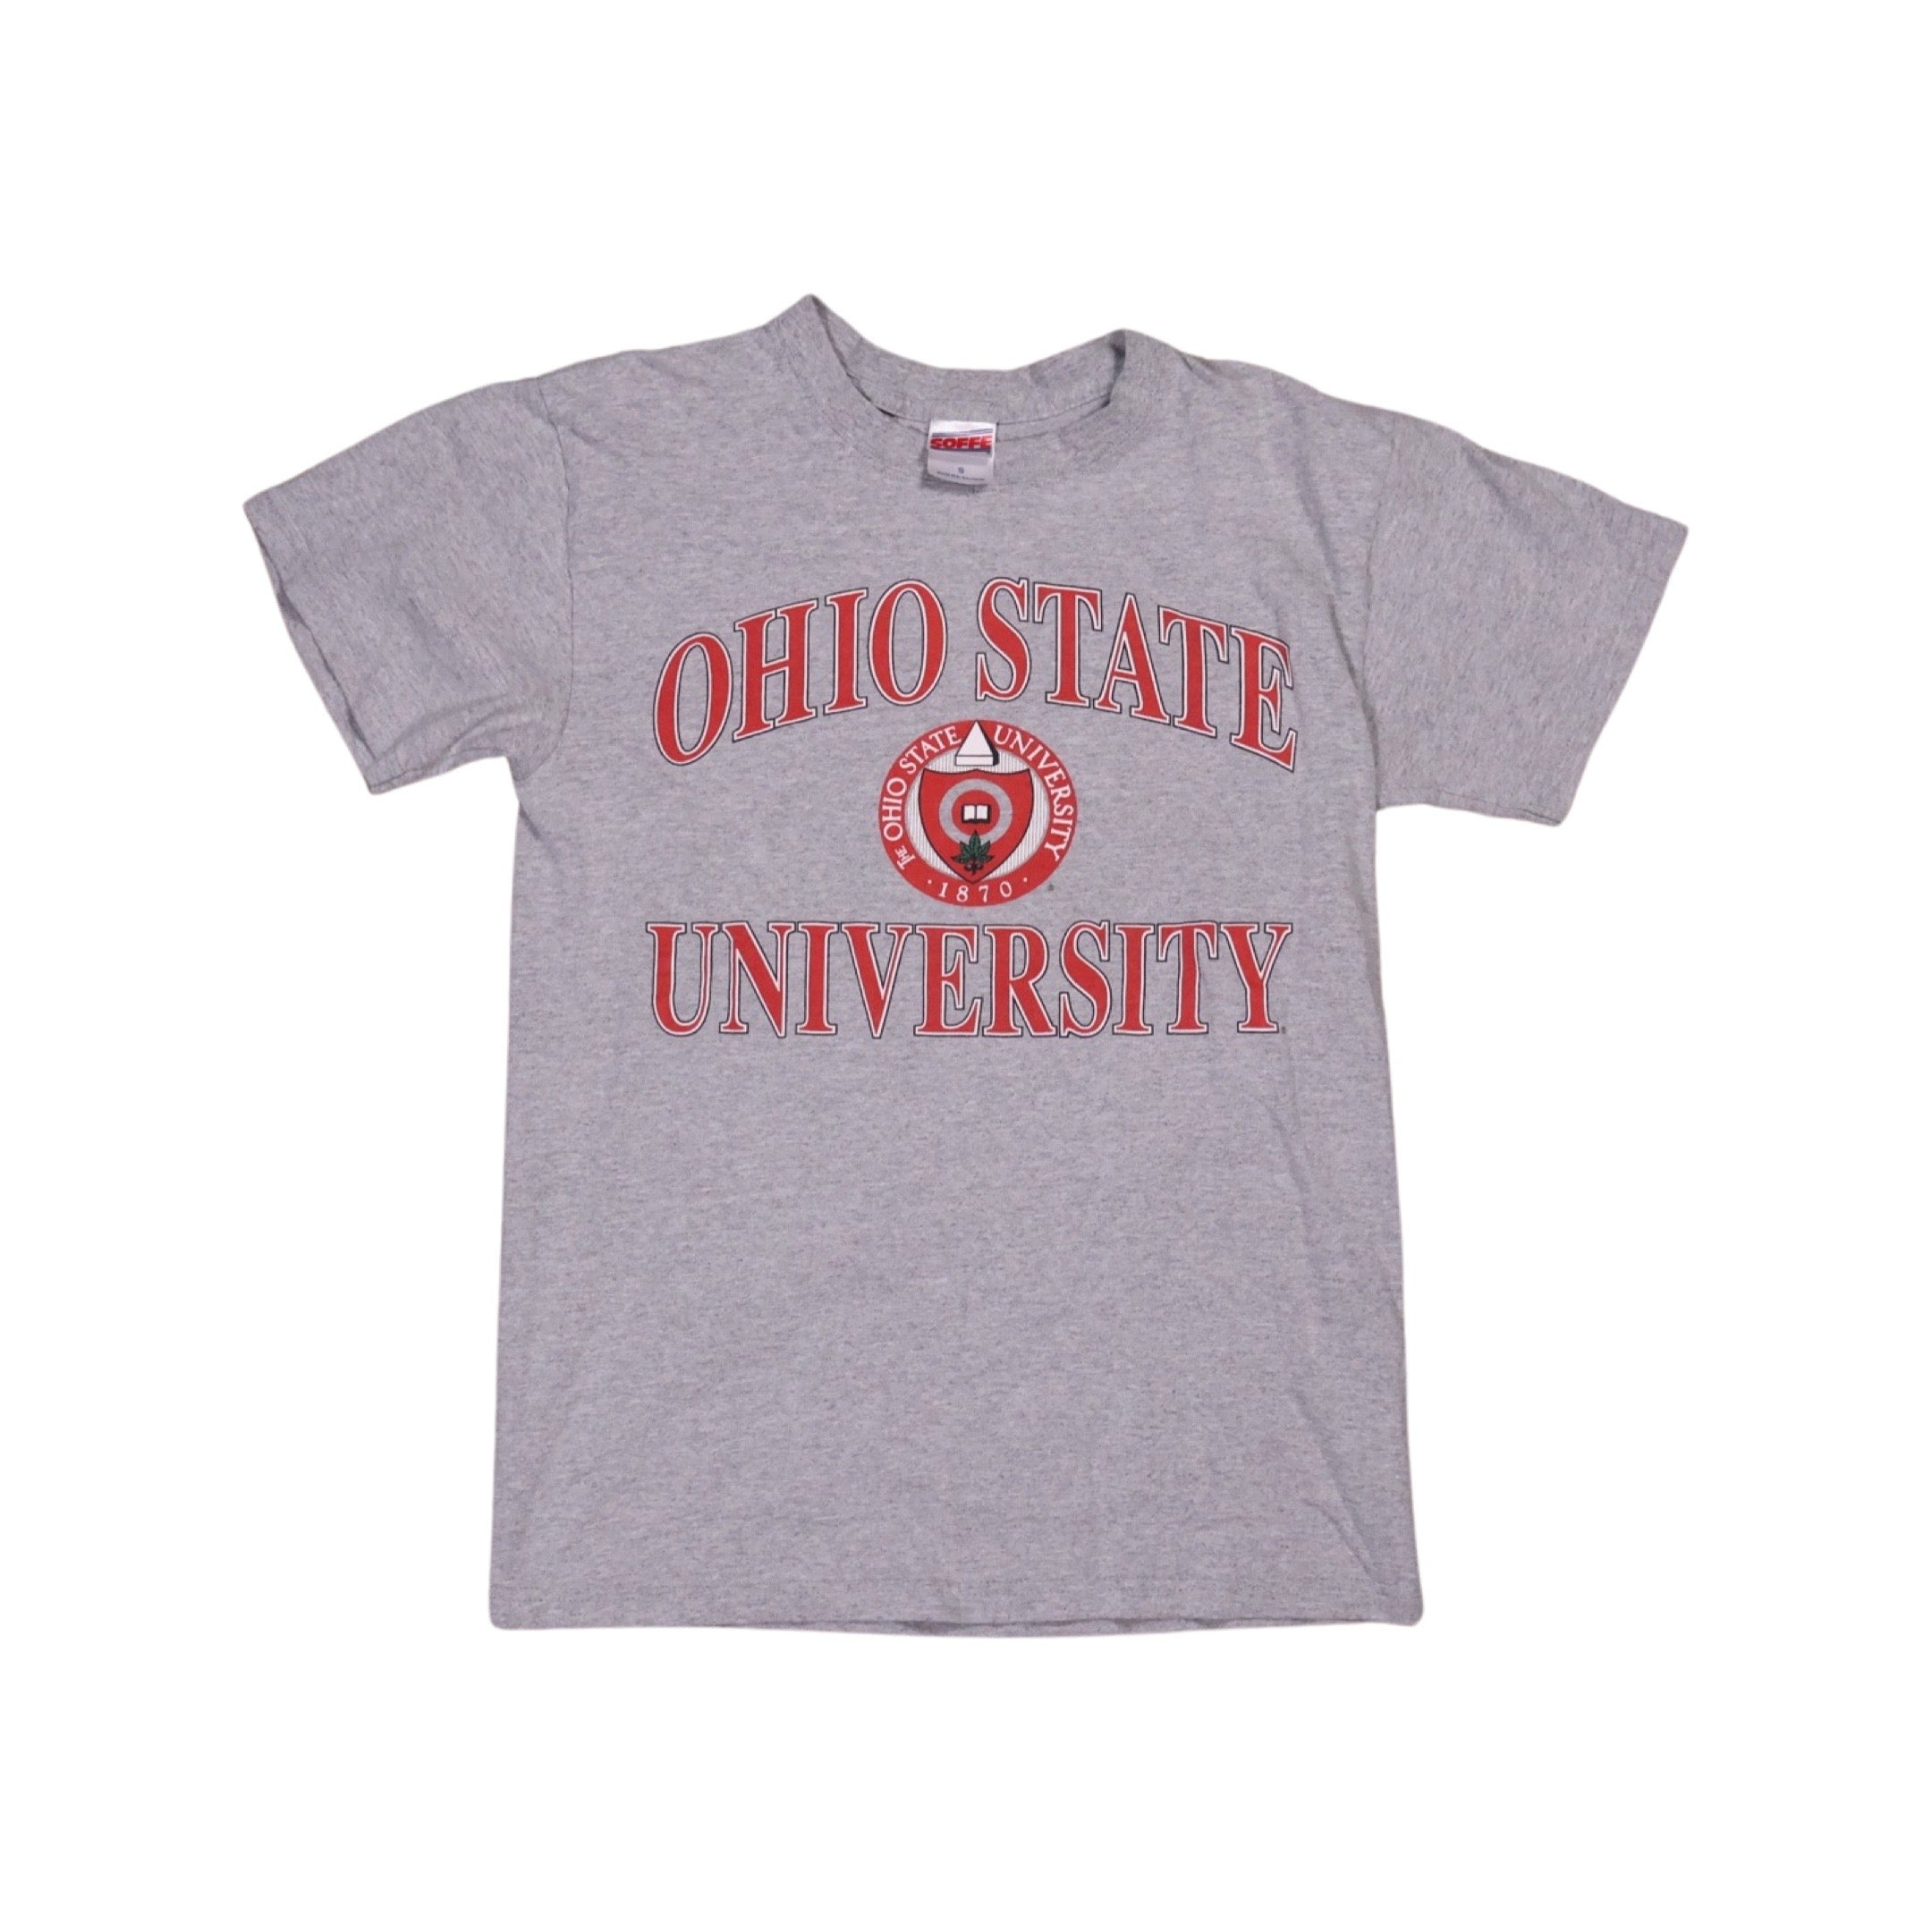 Ohio State University T-Shirt (Small)